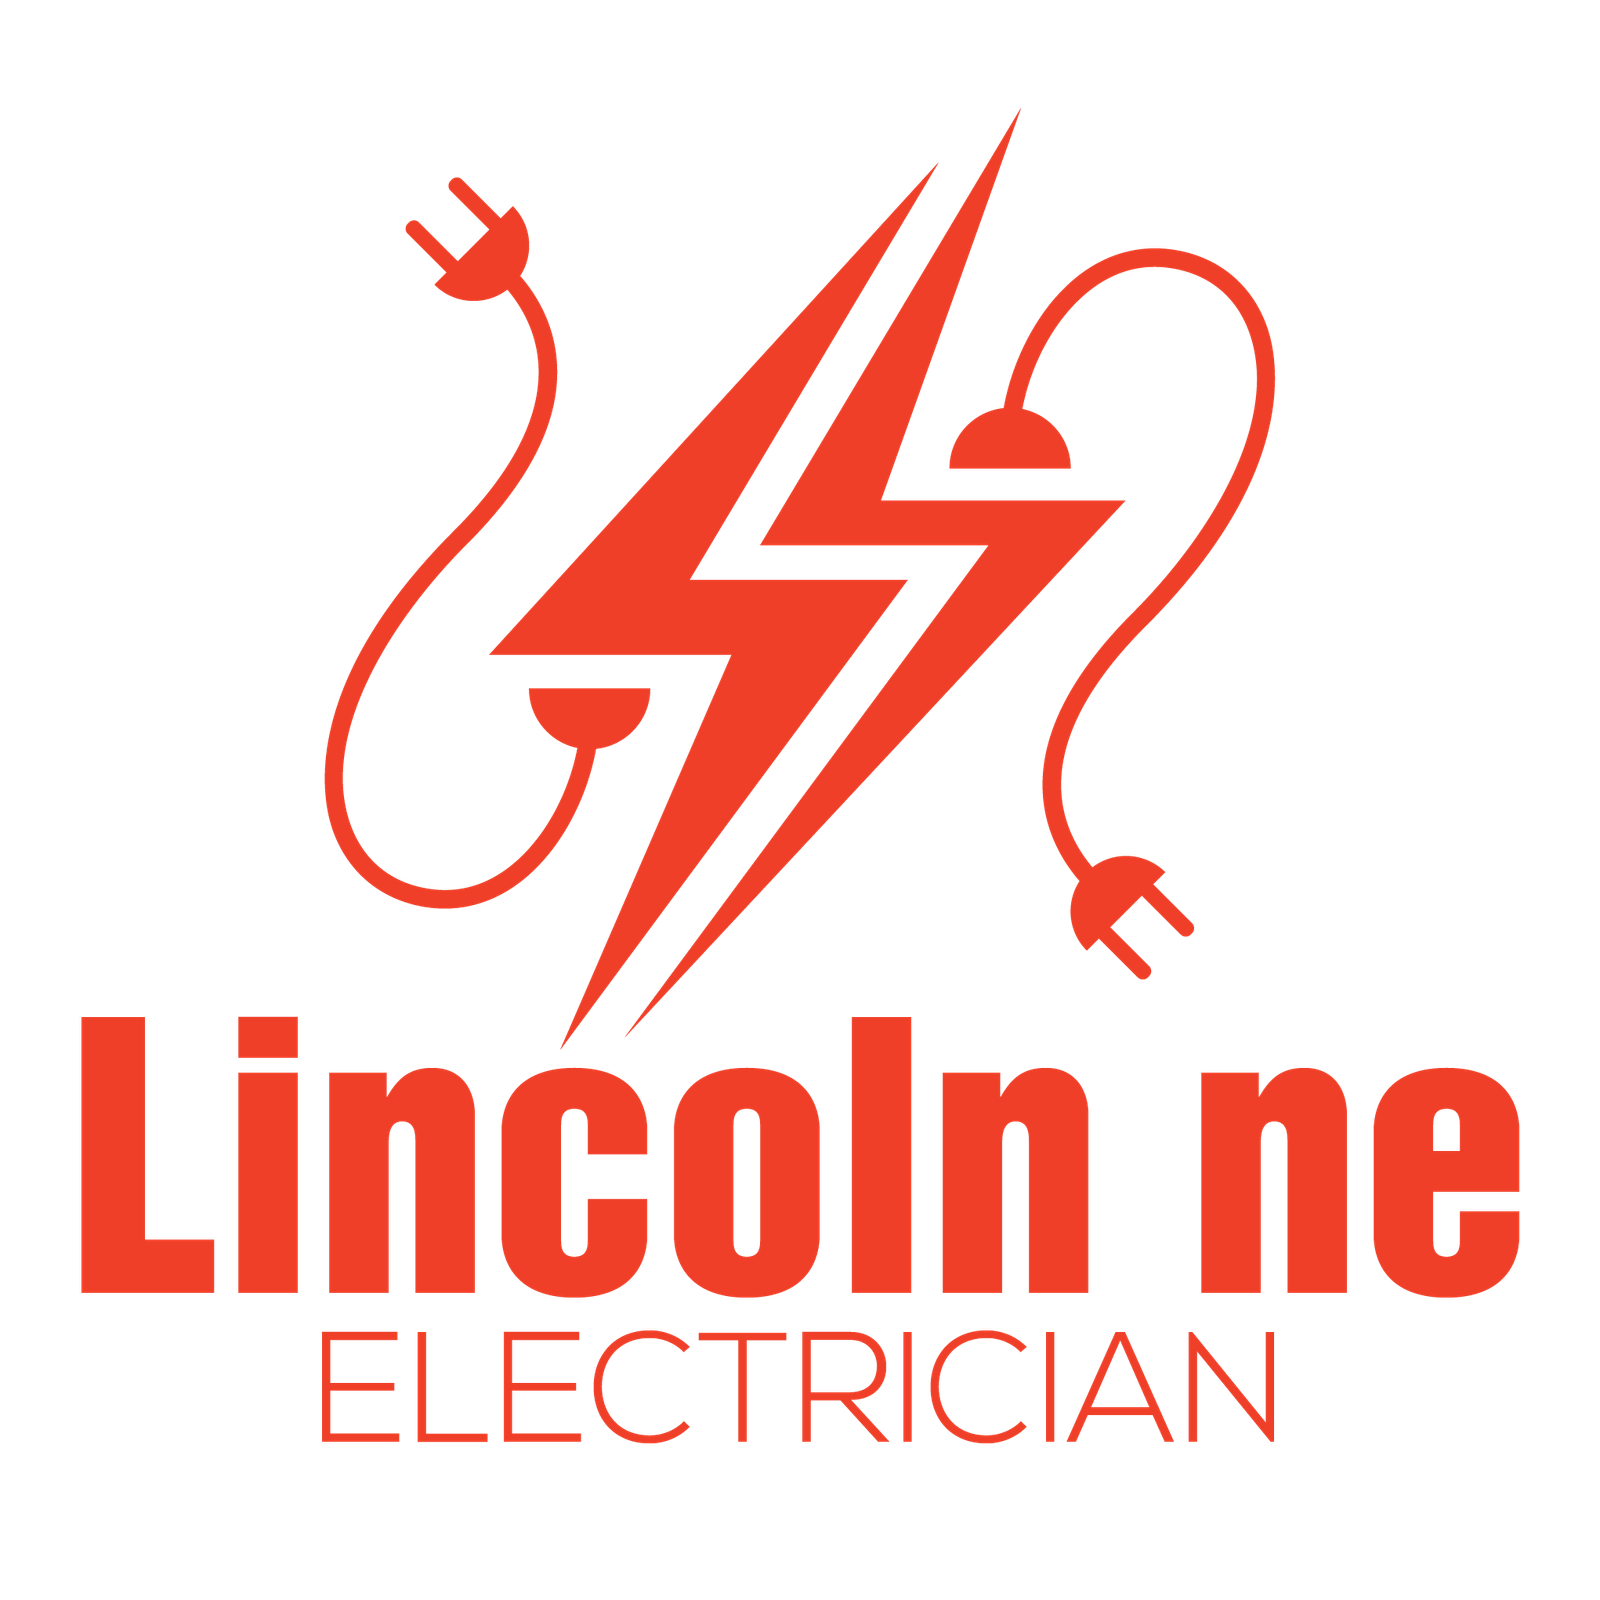 ELECTRICIAN in Lincoln ne